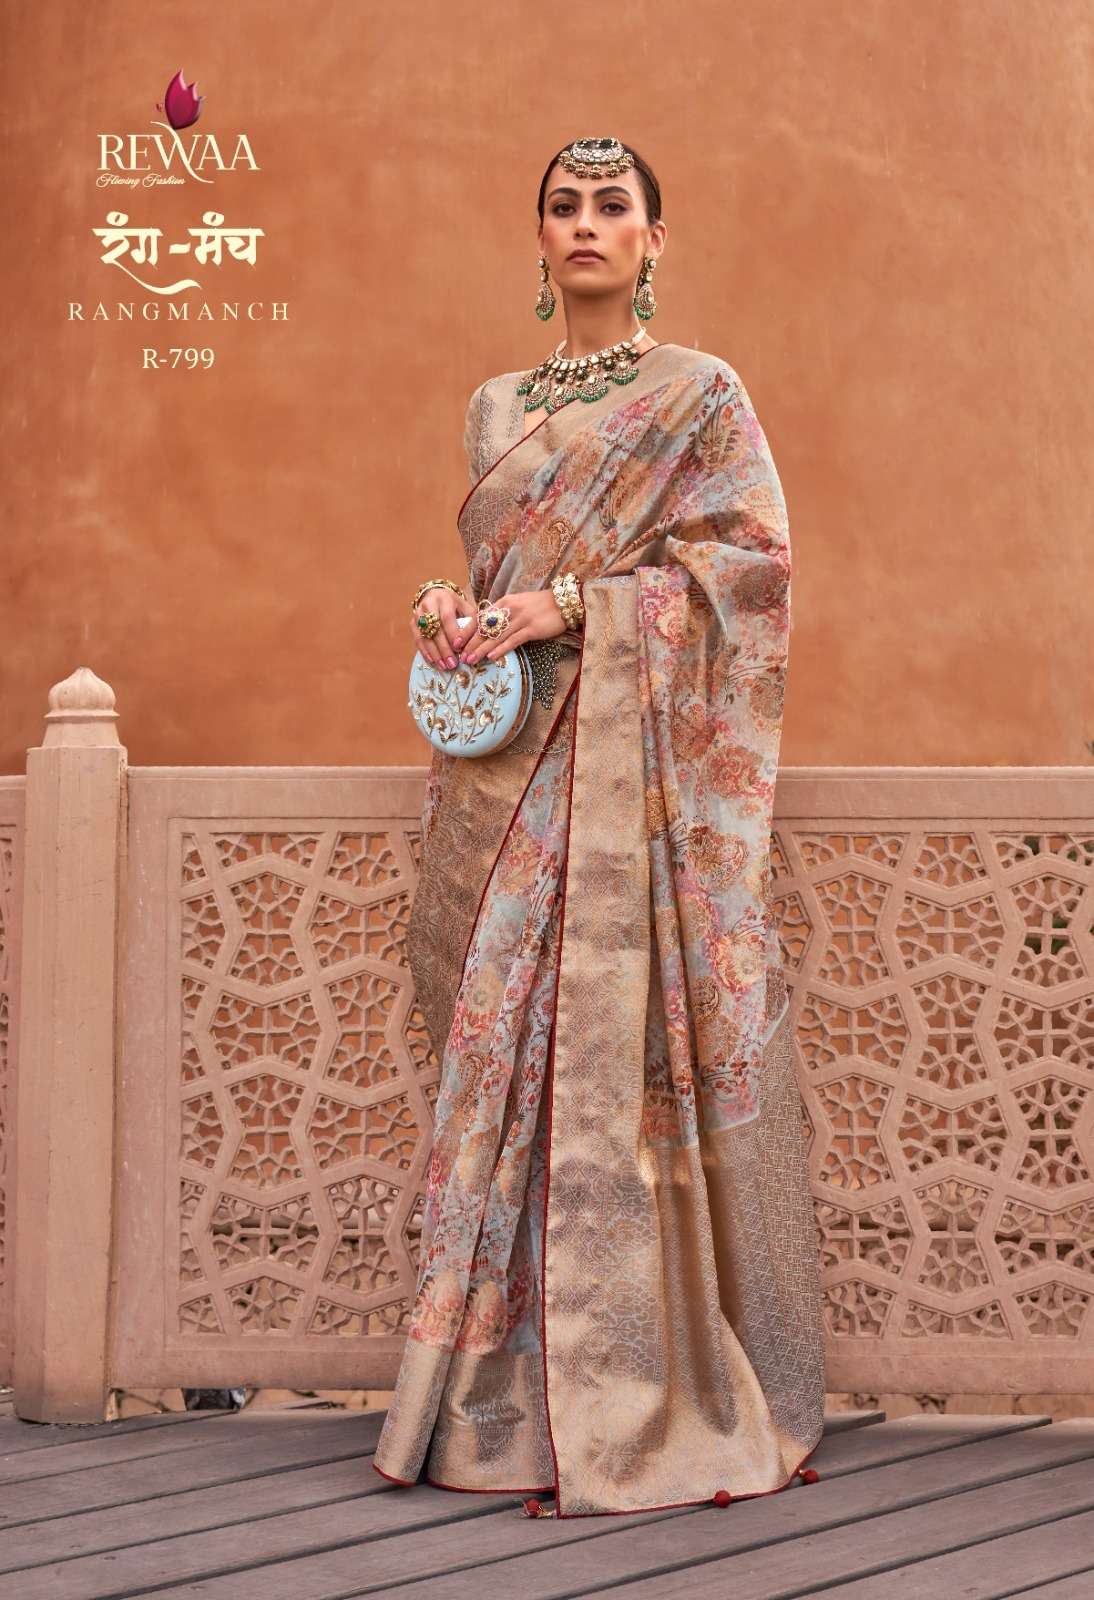 rewaa present rangmanch 793-803 series designer digital print with work festive wear sarees 